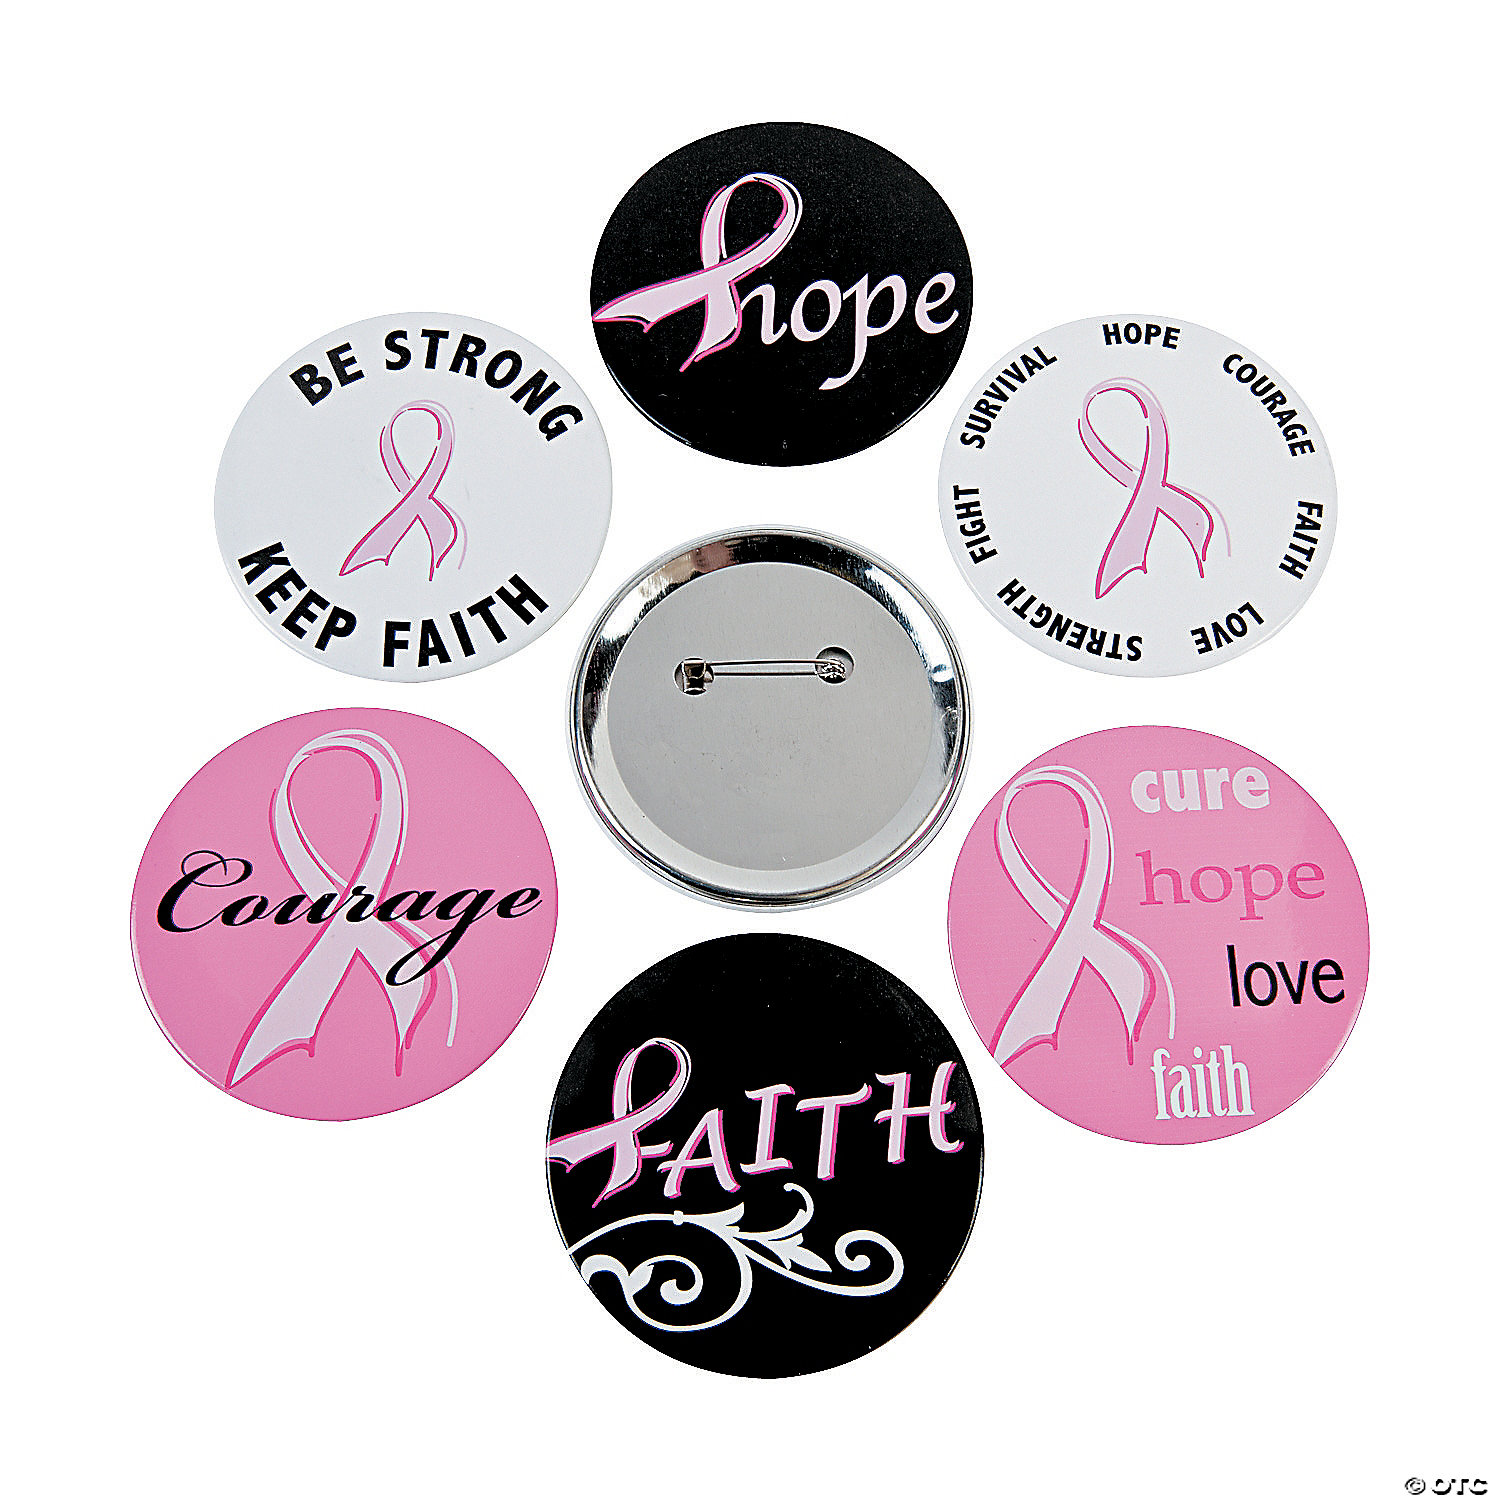 Breast Cancer Awareness Ribbon Badge Reel, Pink Ribbon Badge Reel, Pink for  the Cure, Badge Reels -  Canada